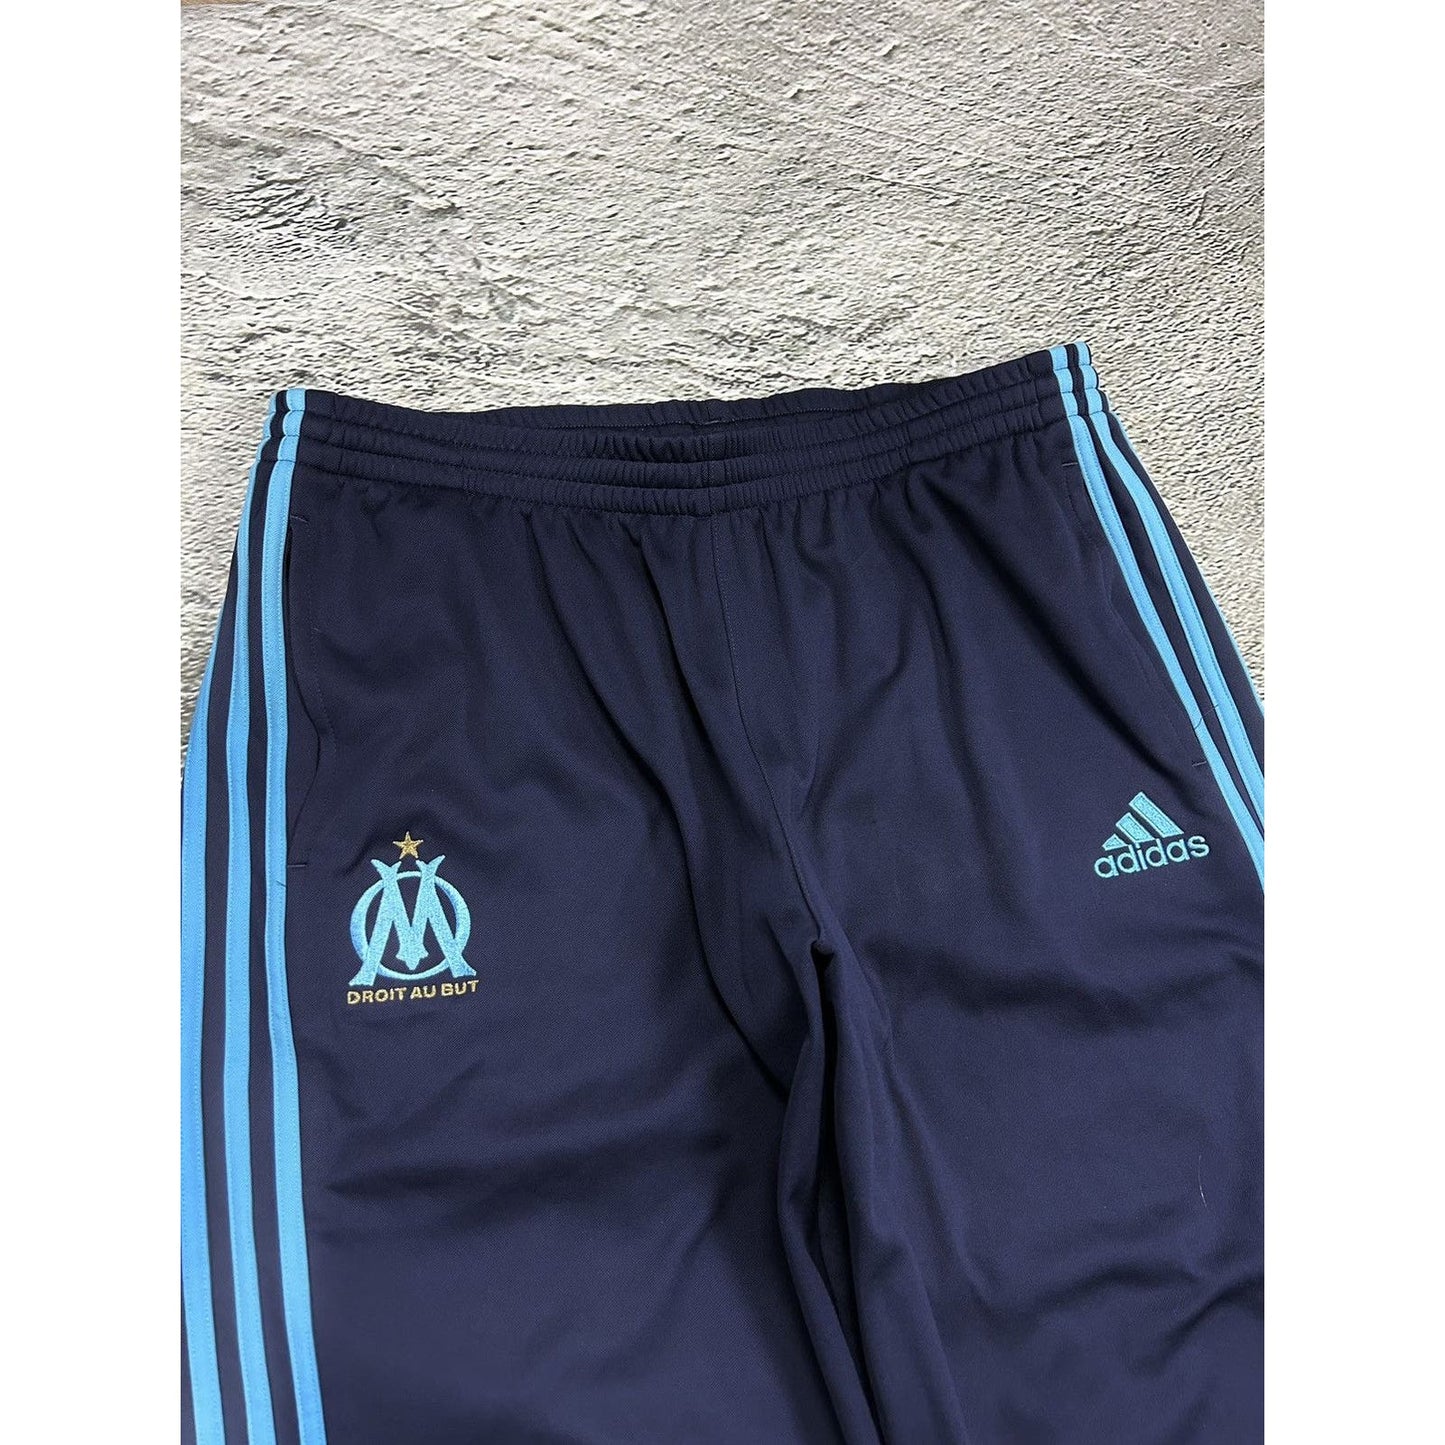 Olympique Marseille Adidas sweatpants vintage navy blue